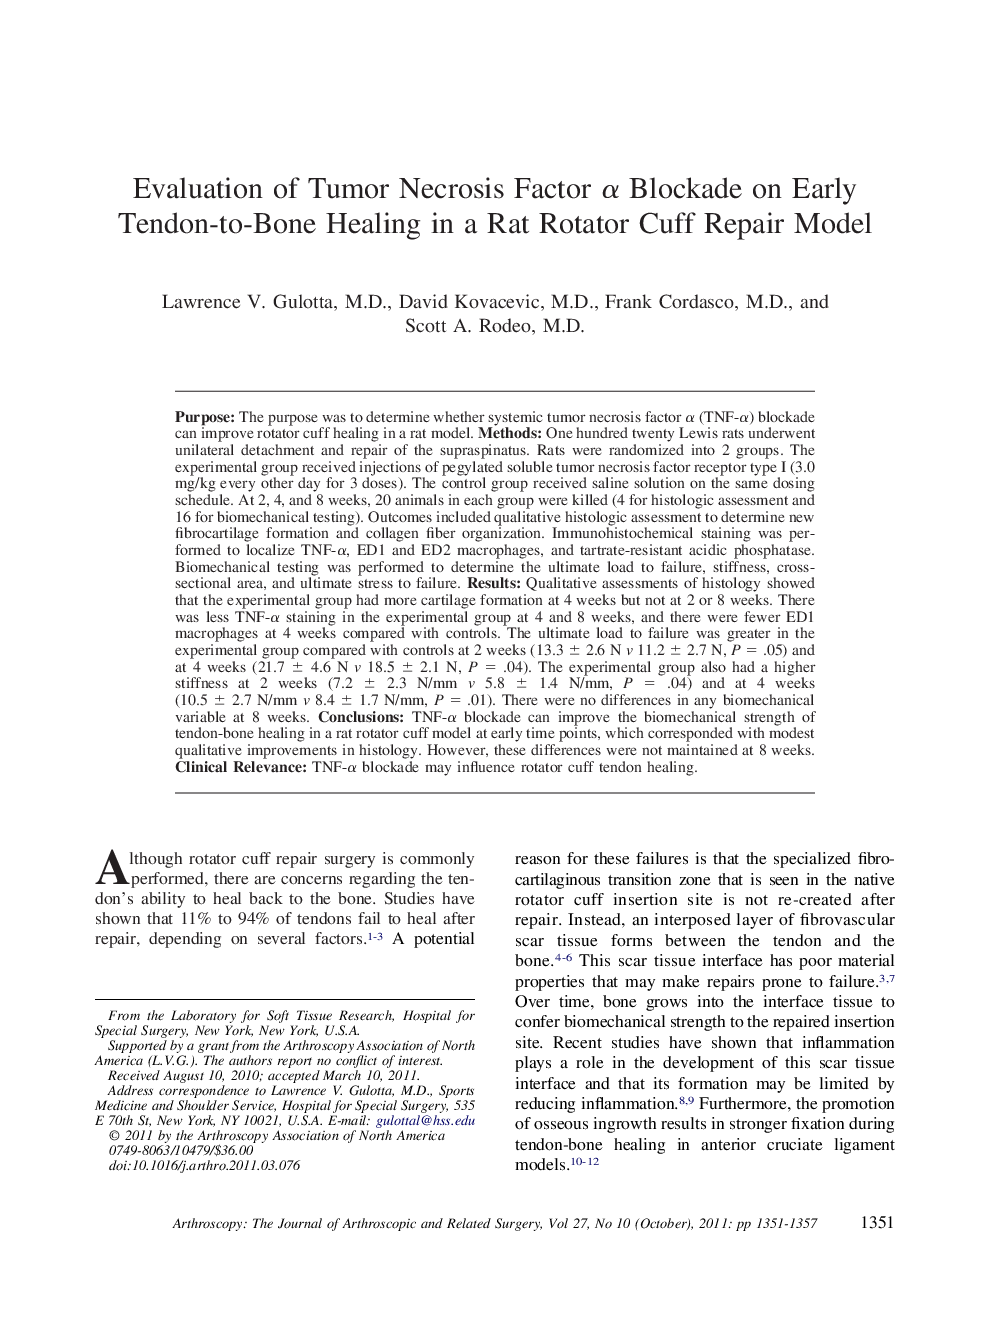 Evaluation of Tumor Necrosis Factor α Blockade on Early Tendon-to-Bone Healing in a Rat Rotator Cuff Repair Model 